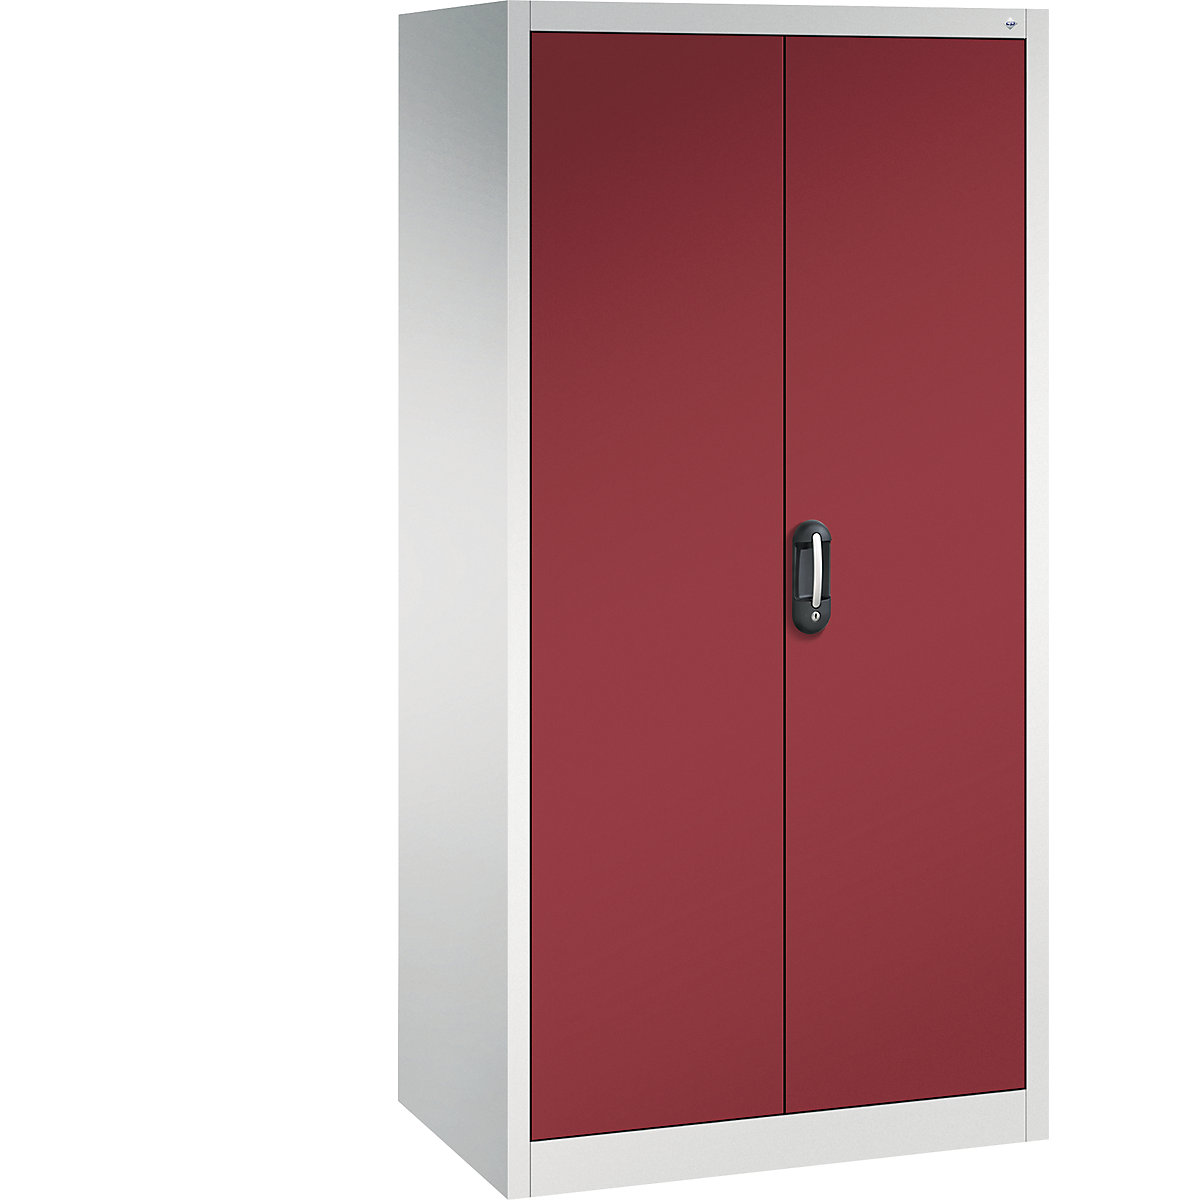 ACURADO universal cupboard – C+P, WxD 930 x 600 mm, light grey / ruby red-12